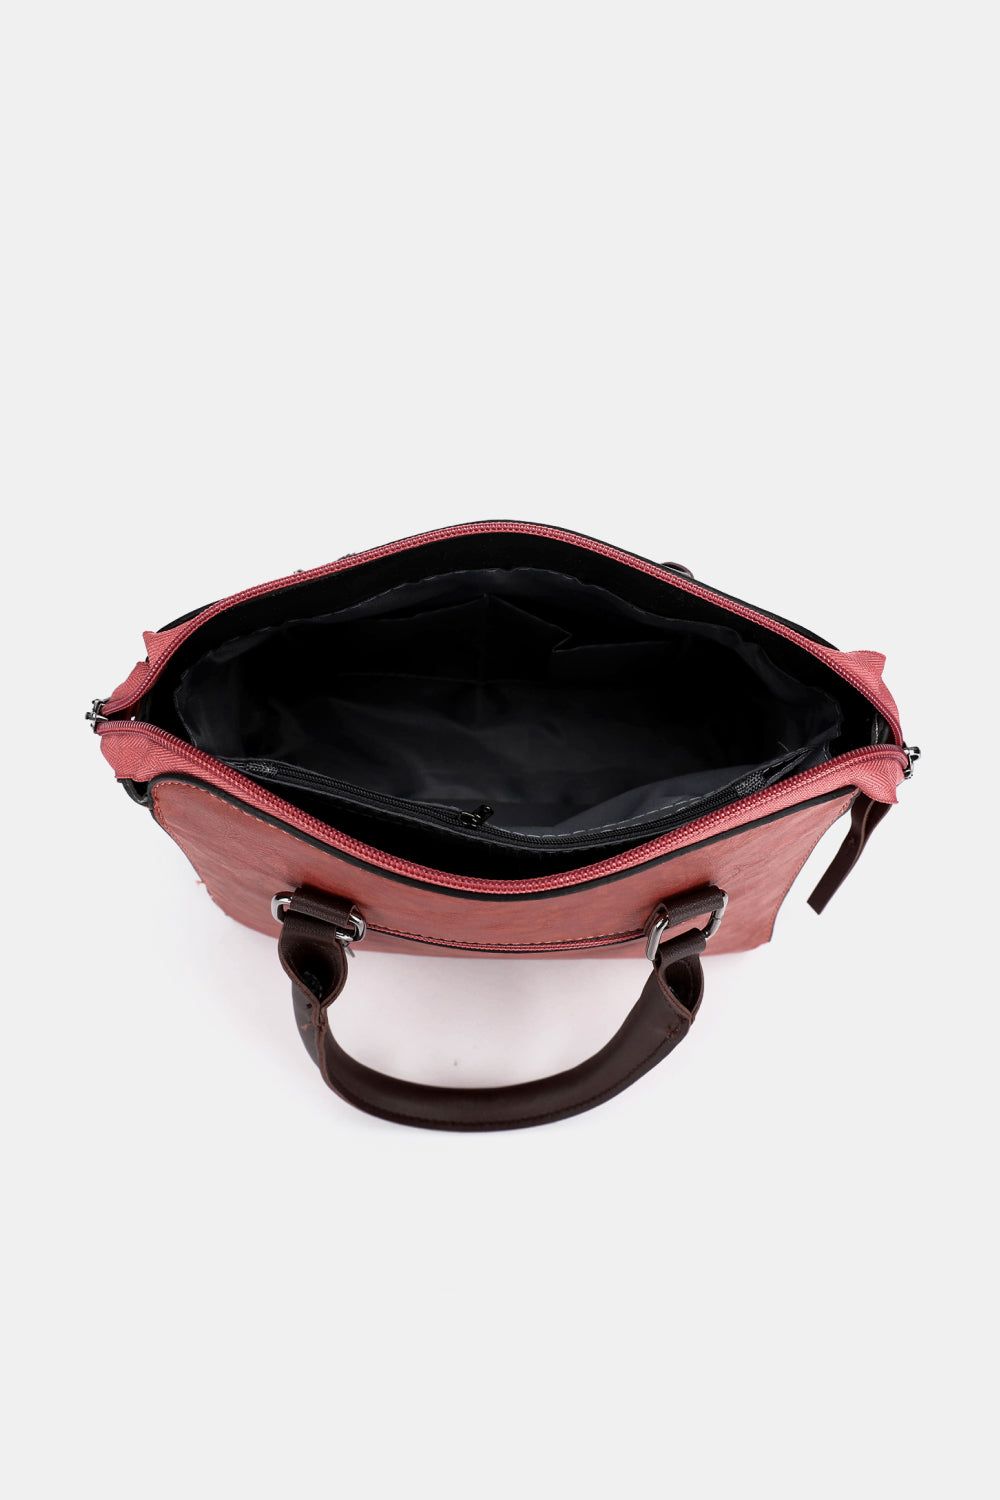 4-Piece PU Leather Bag Set - By Baano